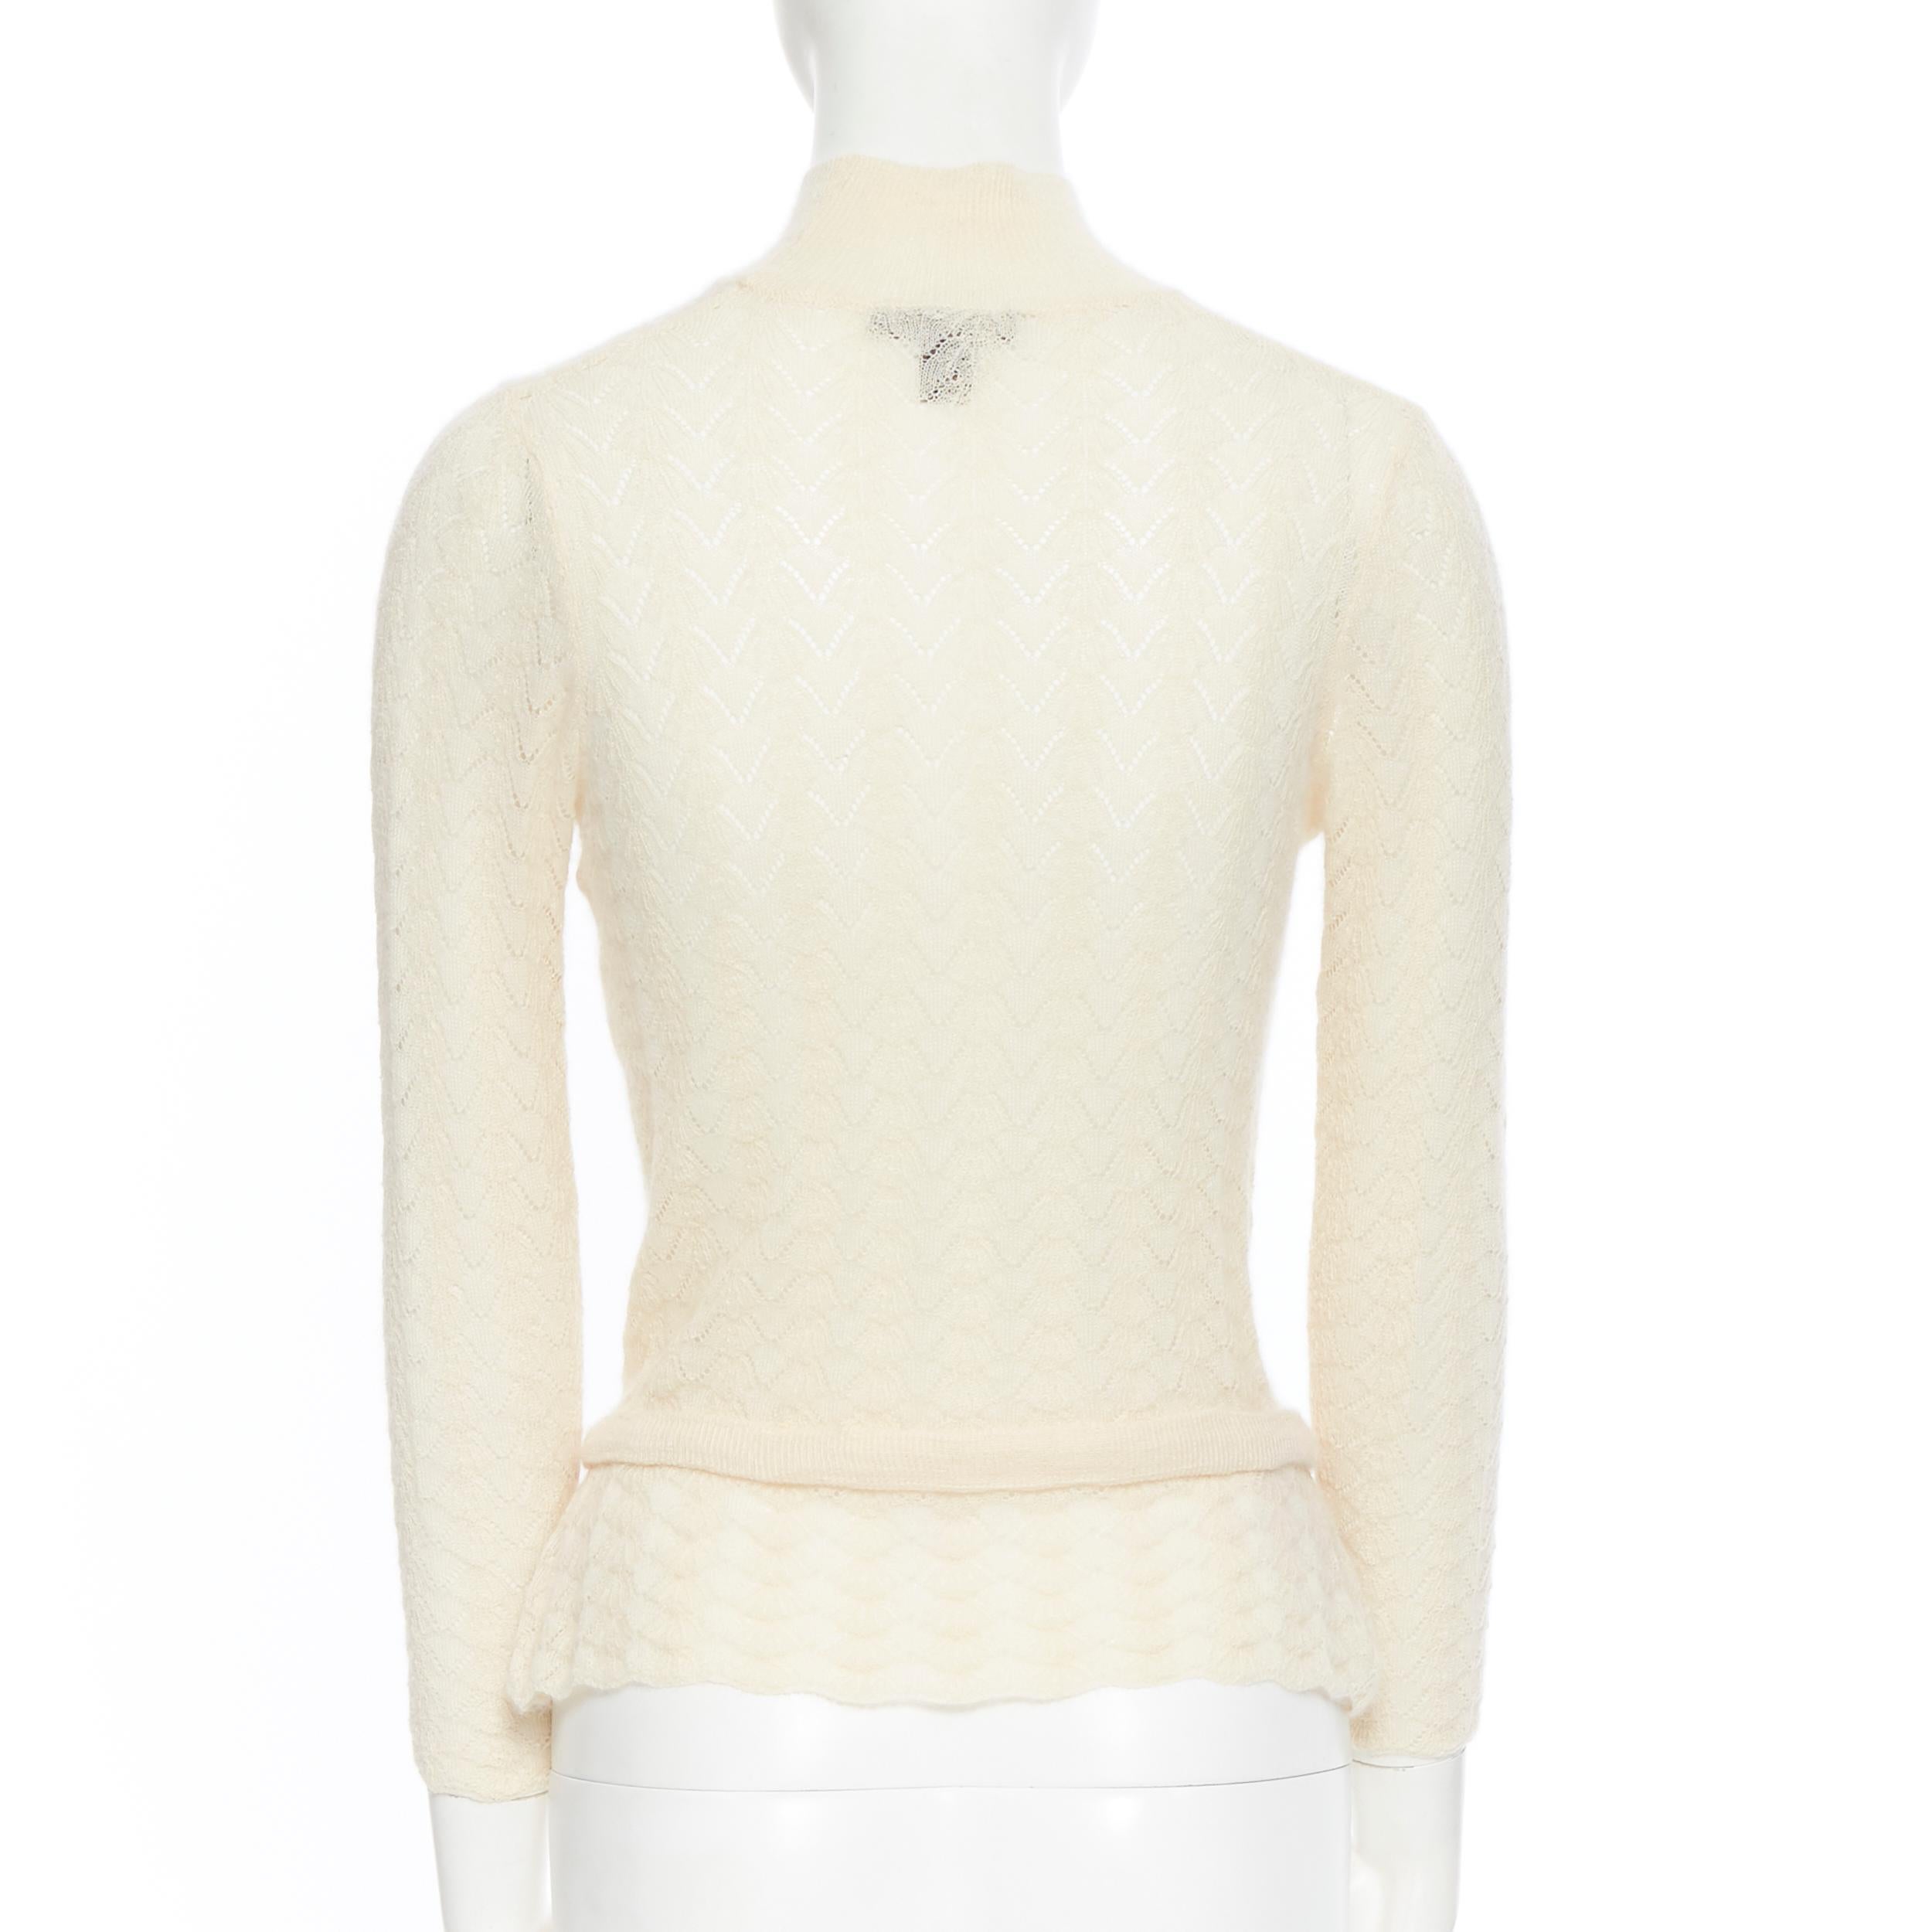 Beige LOUIS VUITTON 100% cashmere cream beige lace knit  turtleneck sweater top M